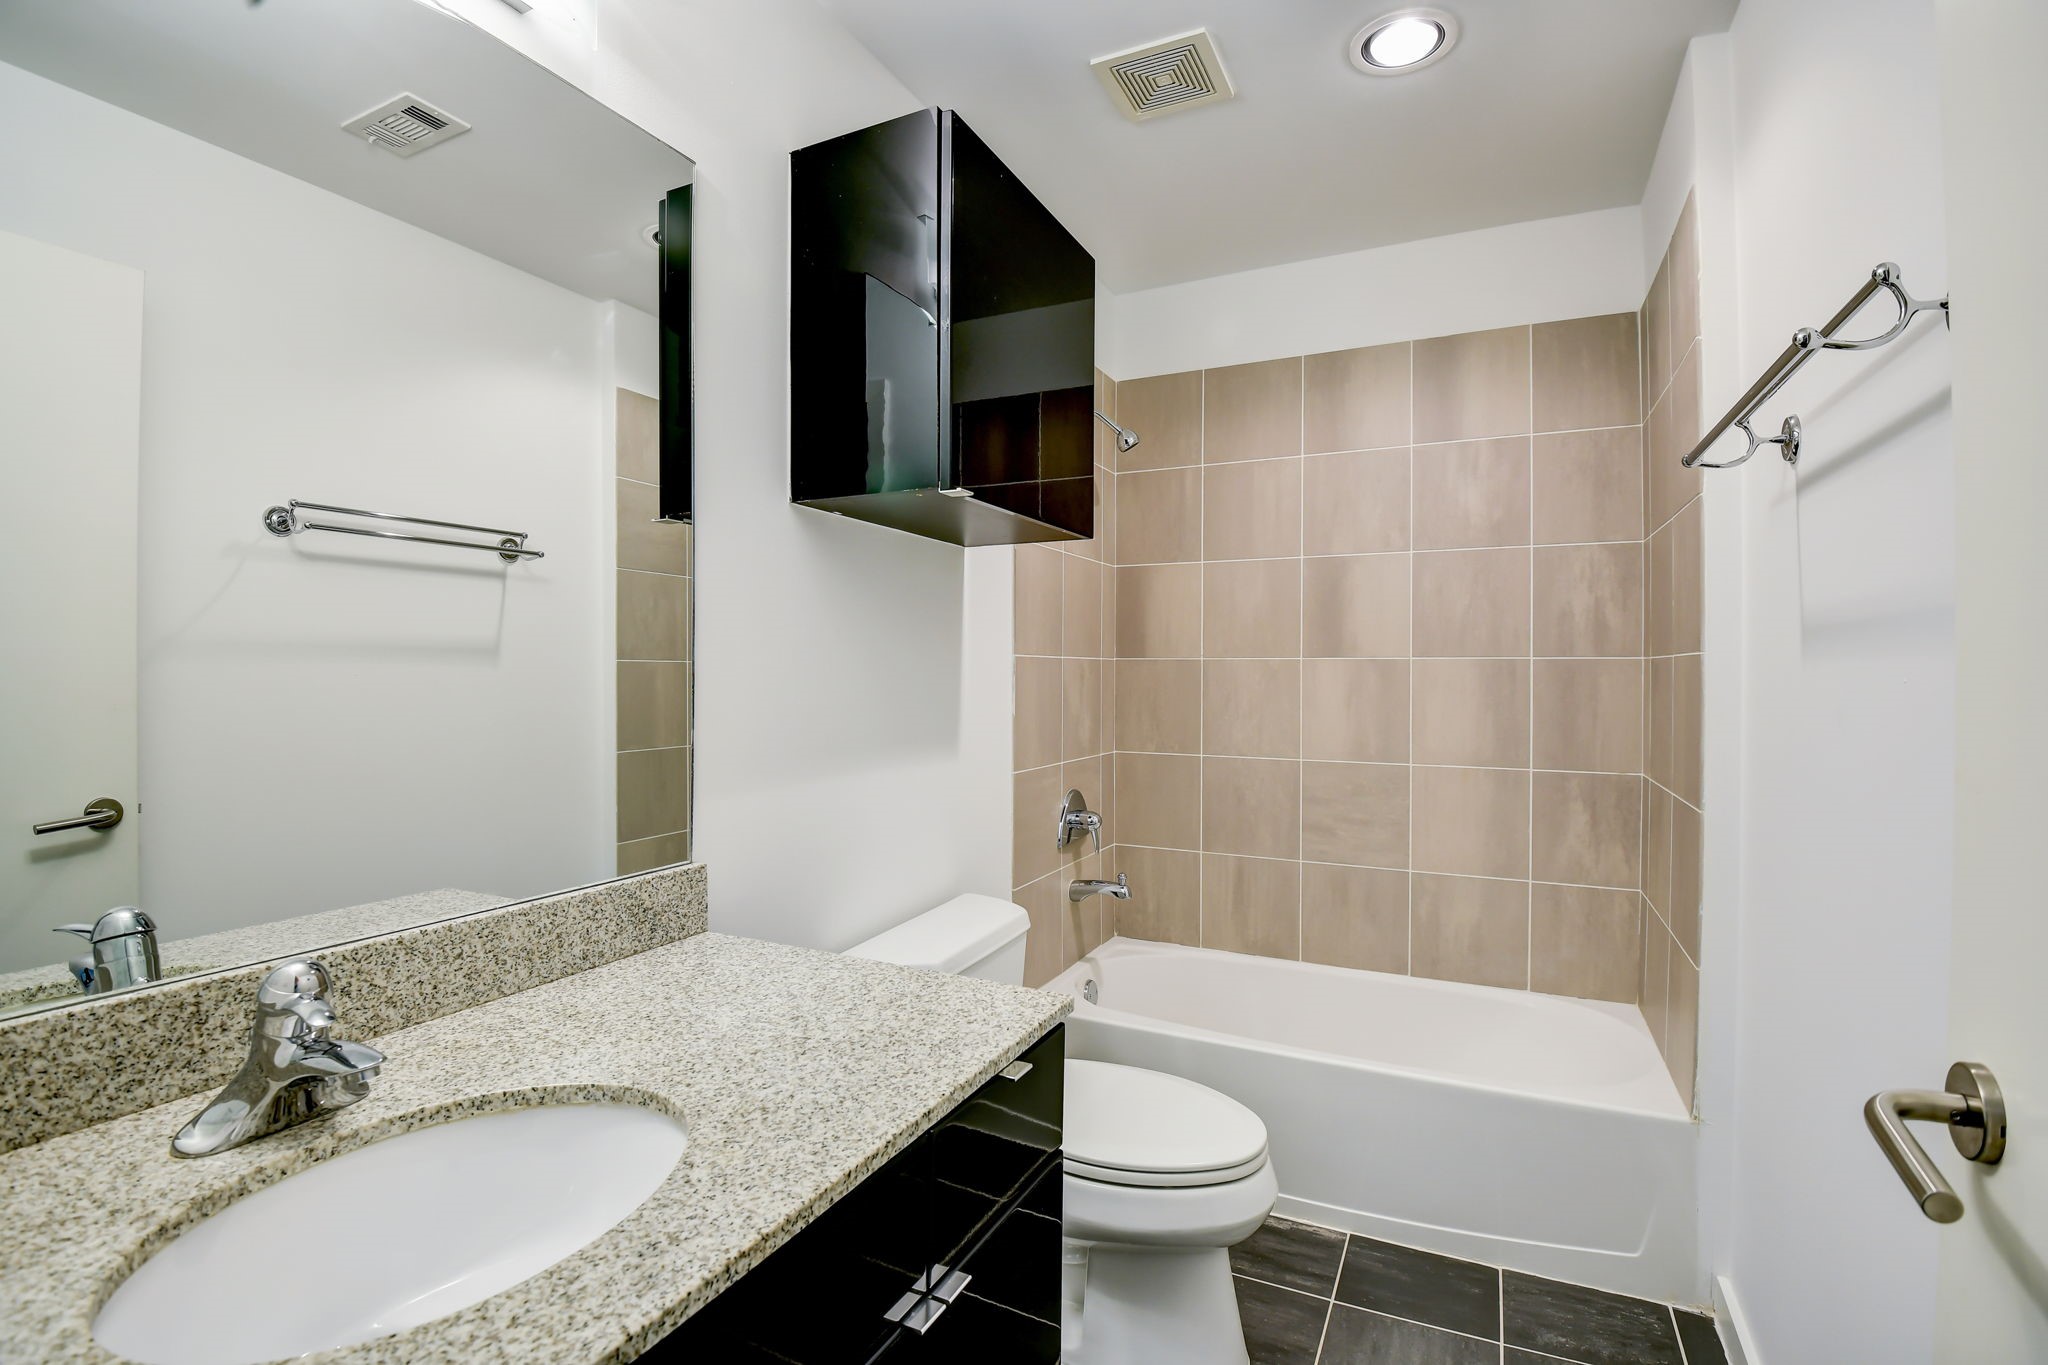 Spare bathroom has full bath/shower combo and granite countertops